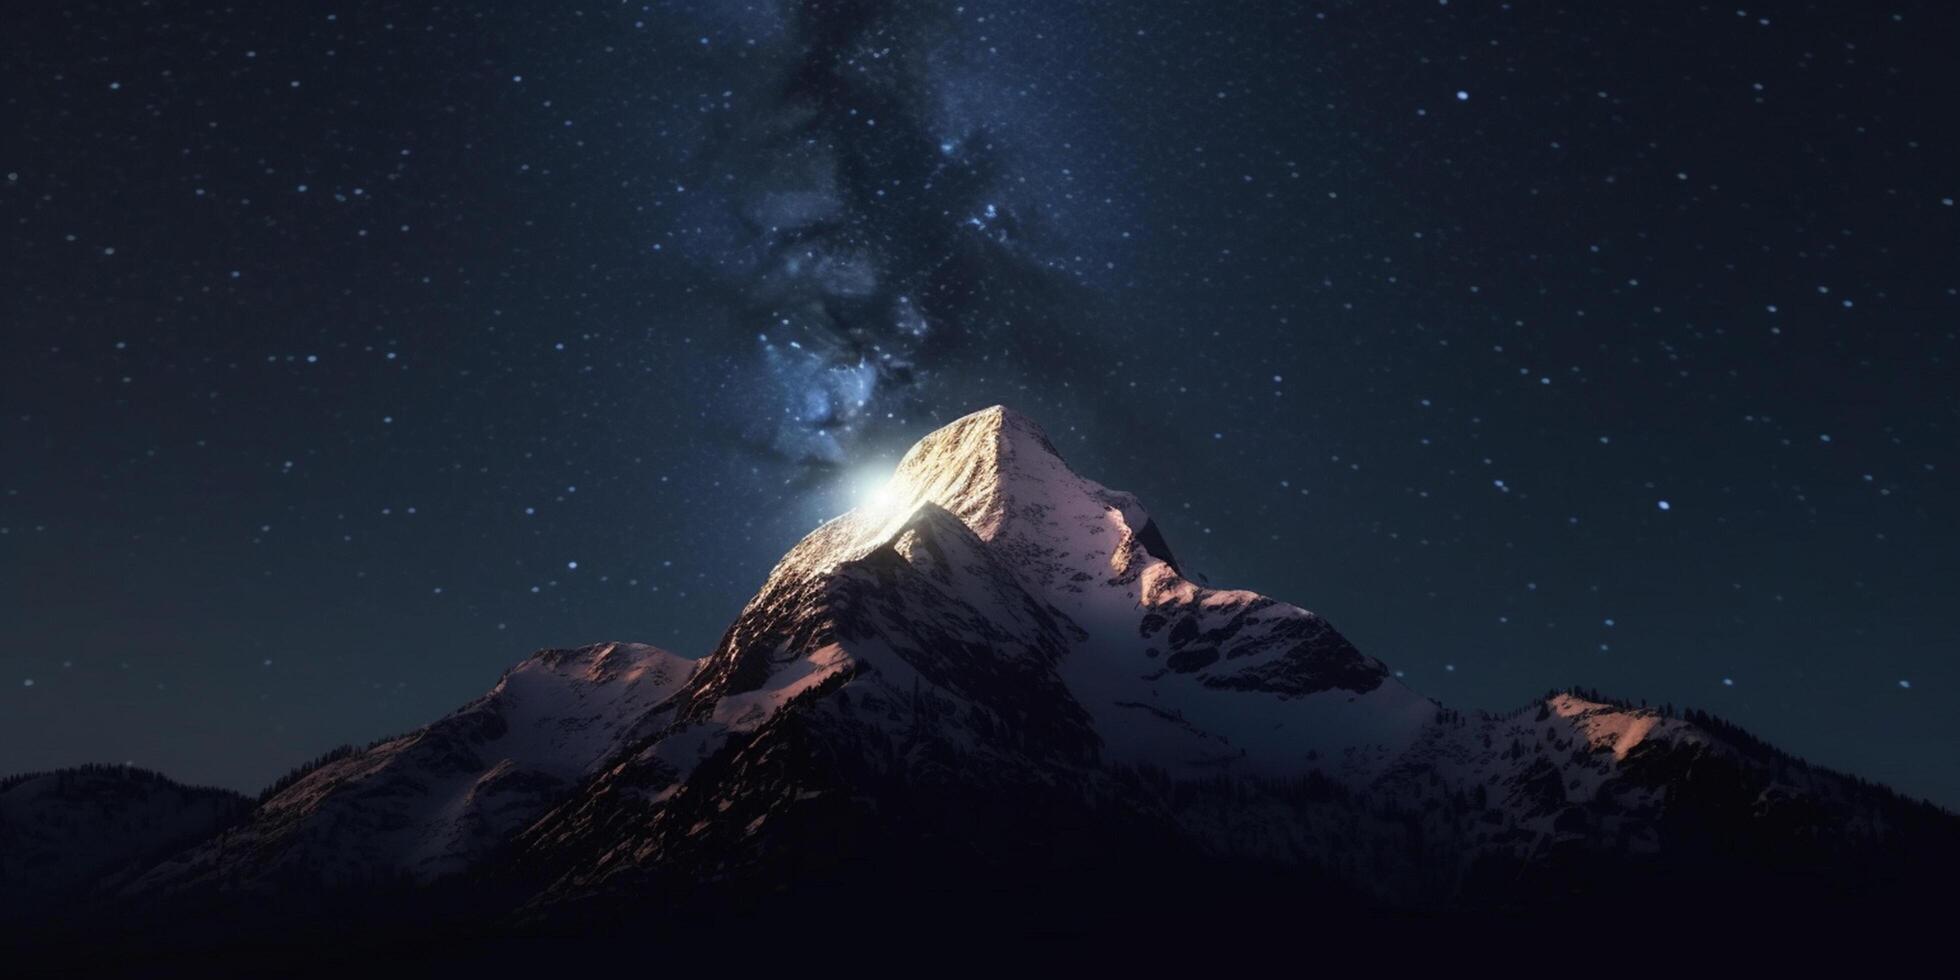 Nighttime Serenity Snowy Mountain Summit Under Starry Skies photo